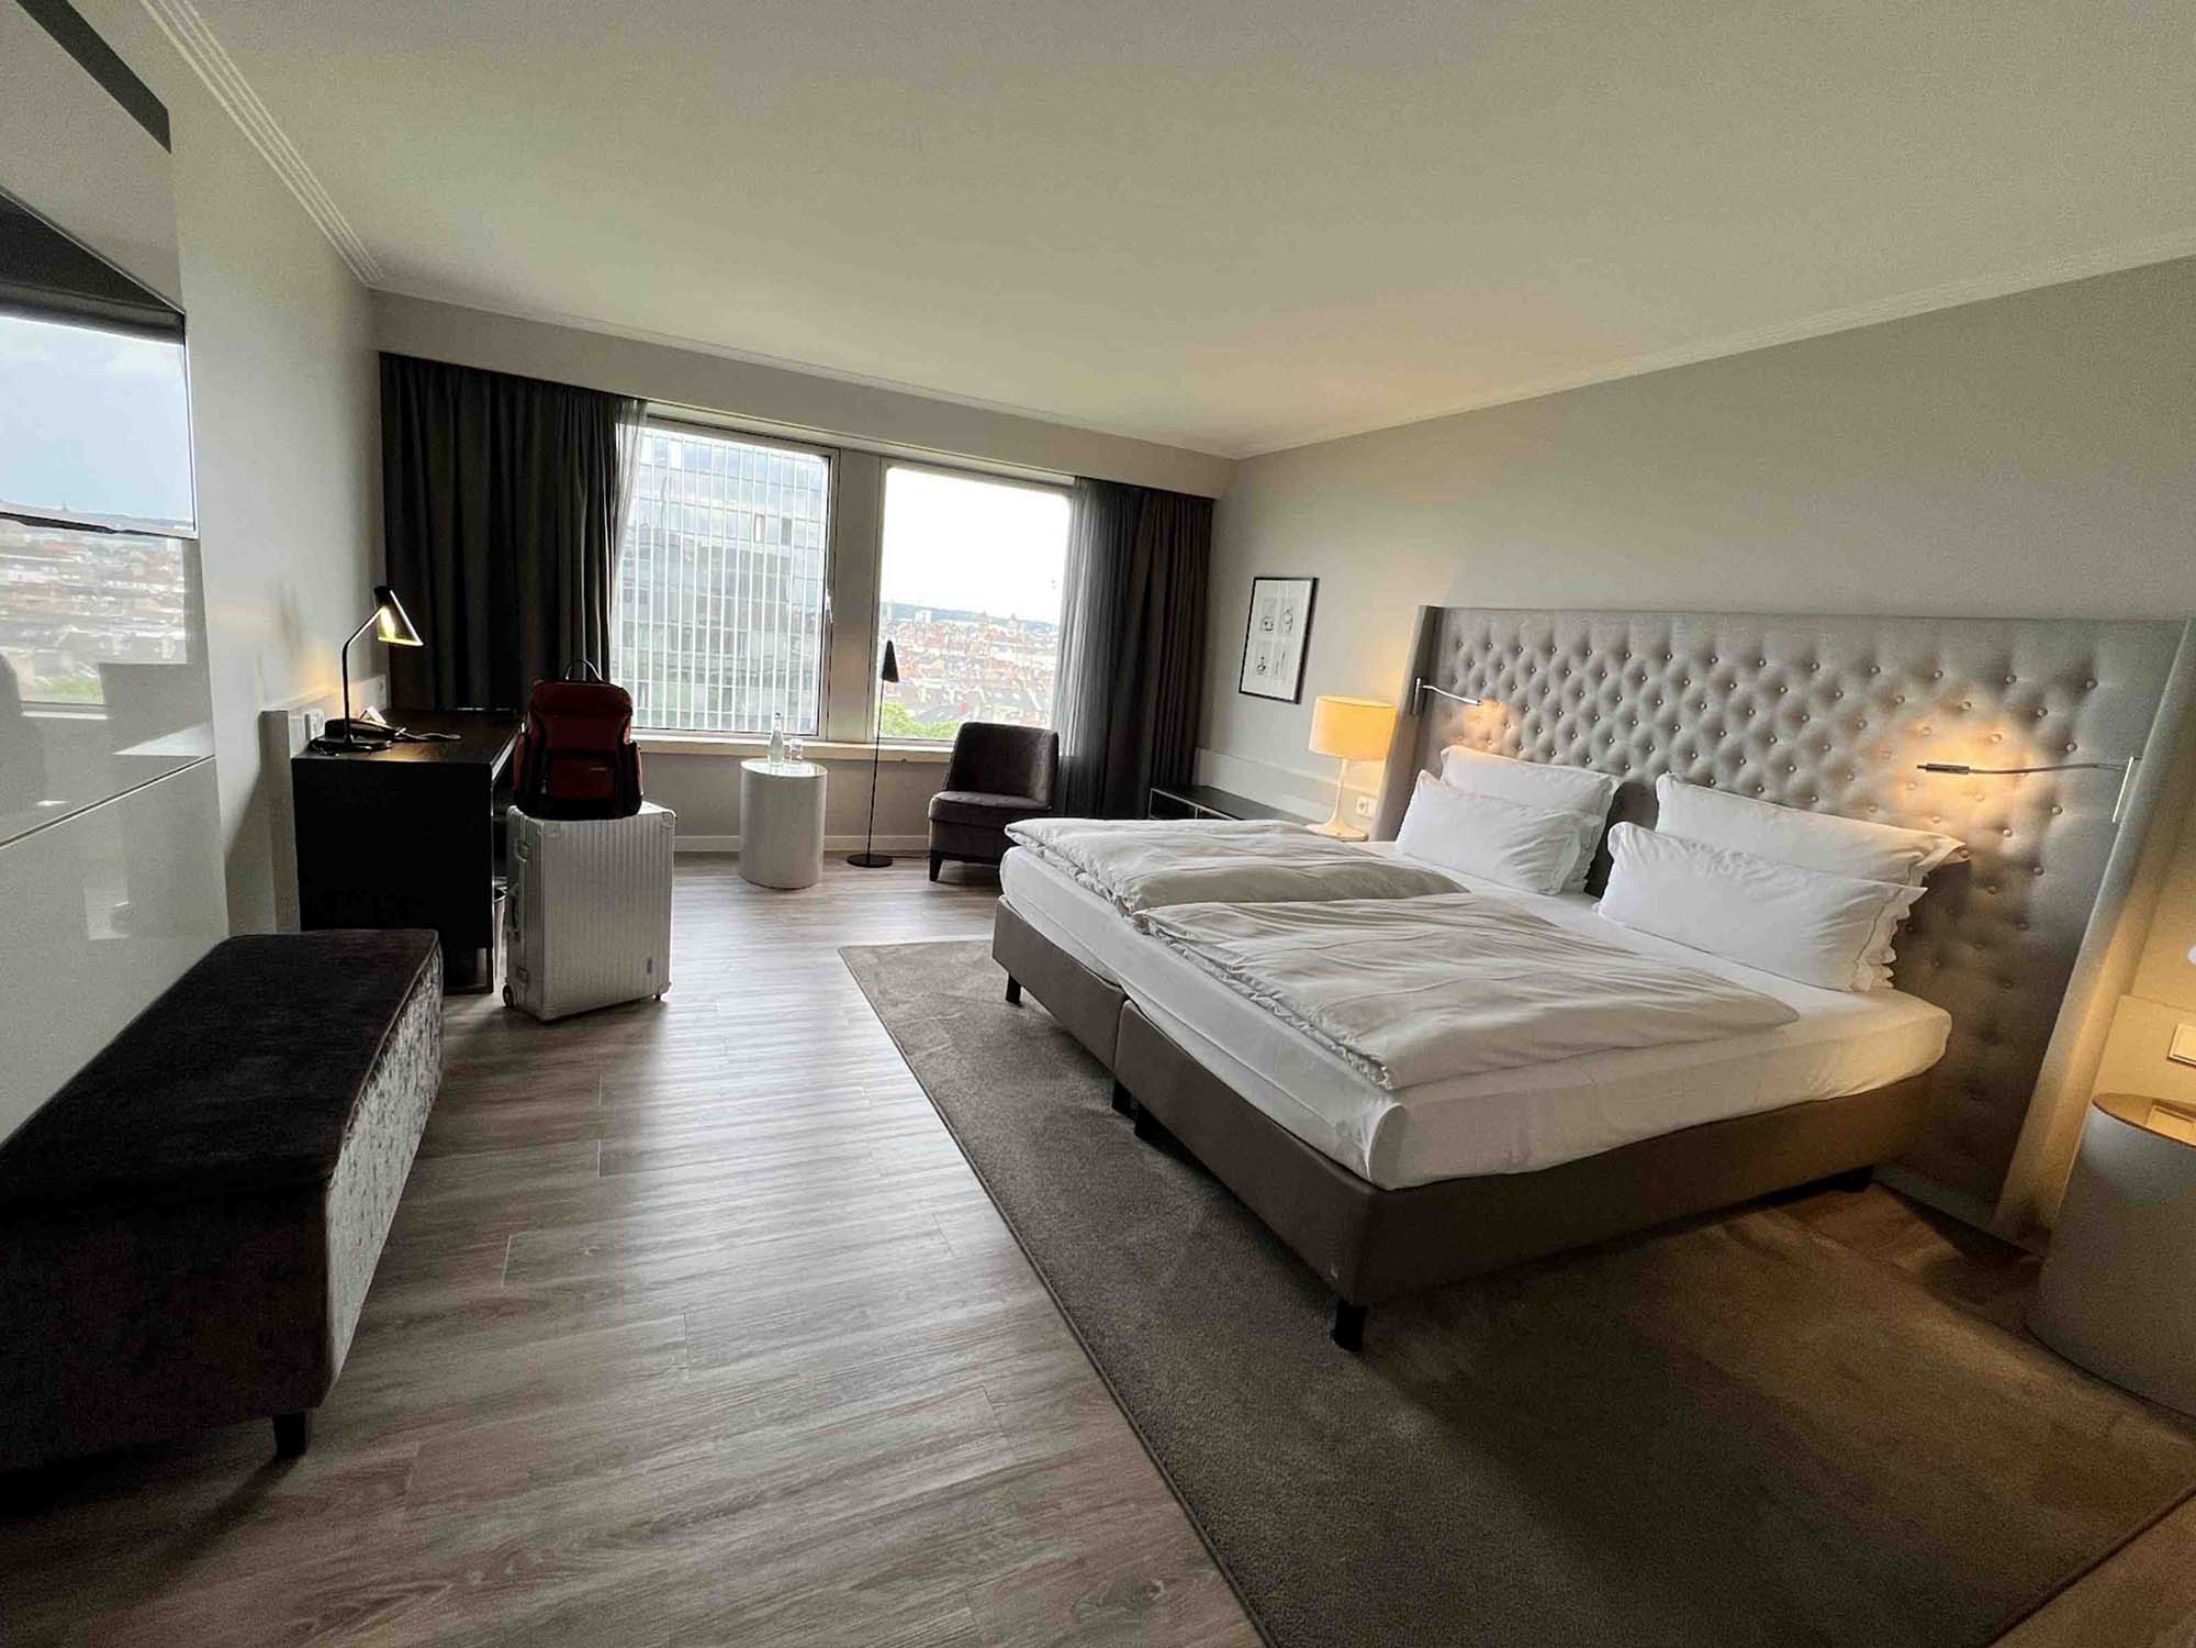 Hotel Nikko - Best Hotels in Dusseldorf